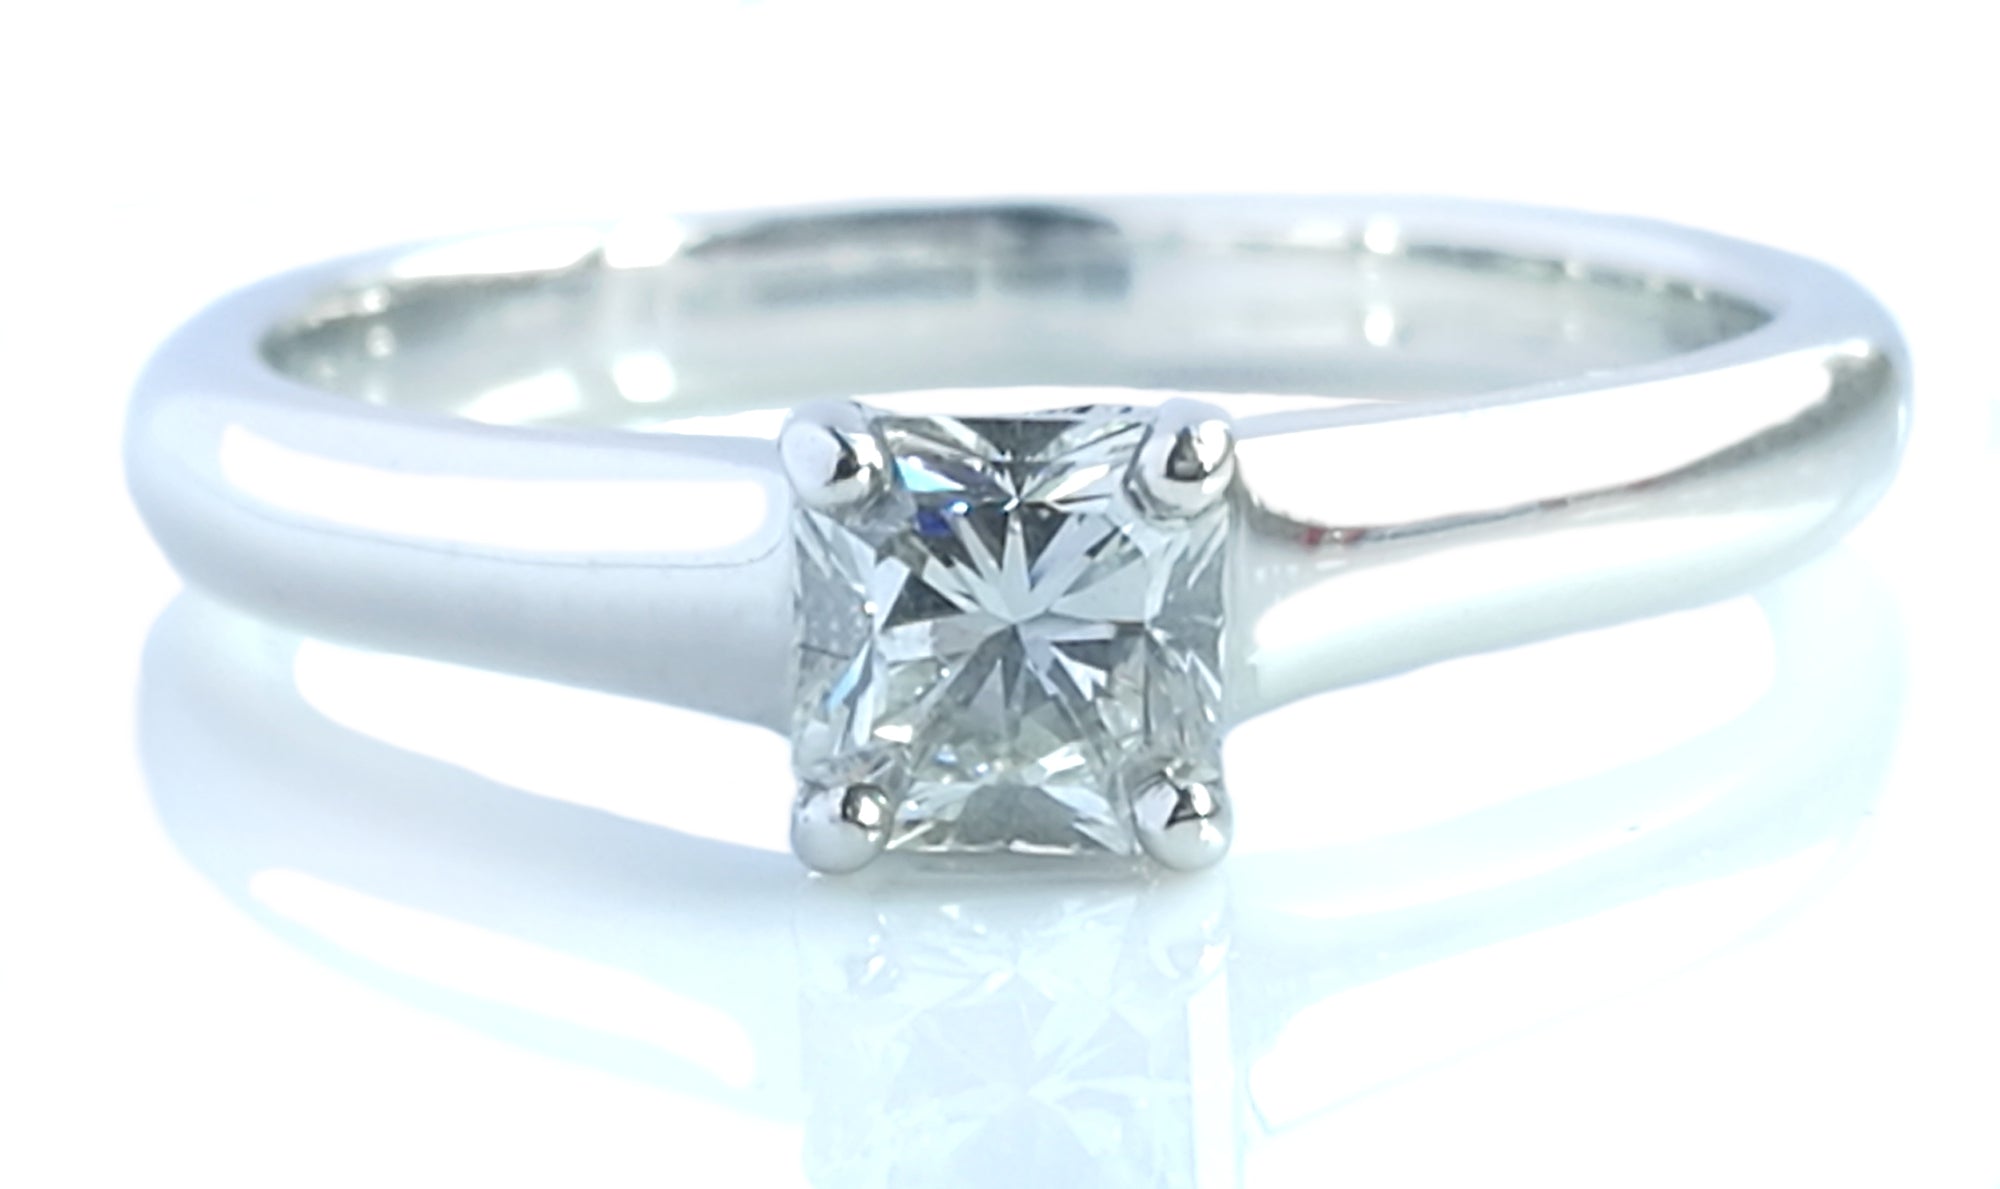 Diamond Engagement Rings for Women Princess cut Solitaire Diamond Ring  Platinum 0.60 carat (G,VS2) (RS 4) | Amazon.com